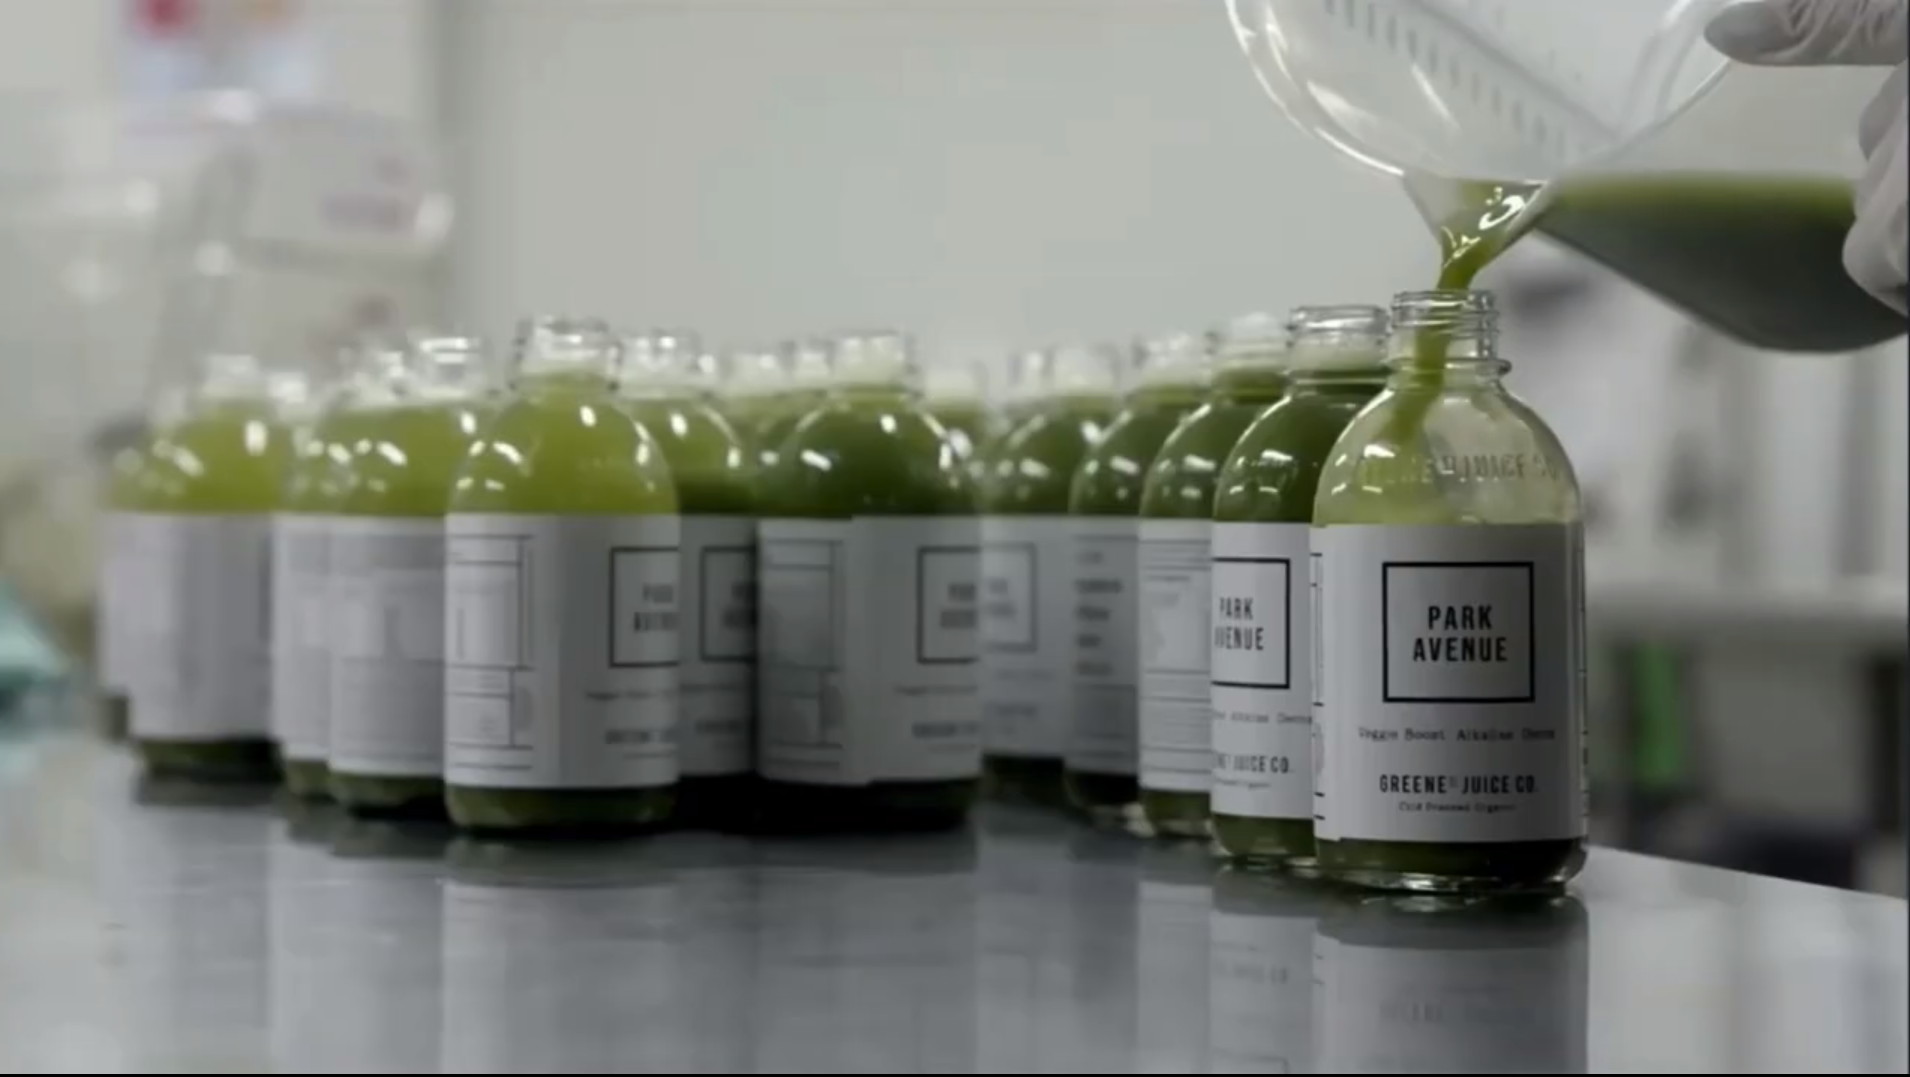 Load video: The House of Wellness x Greene Street Juice